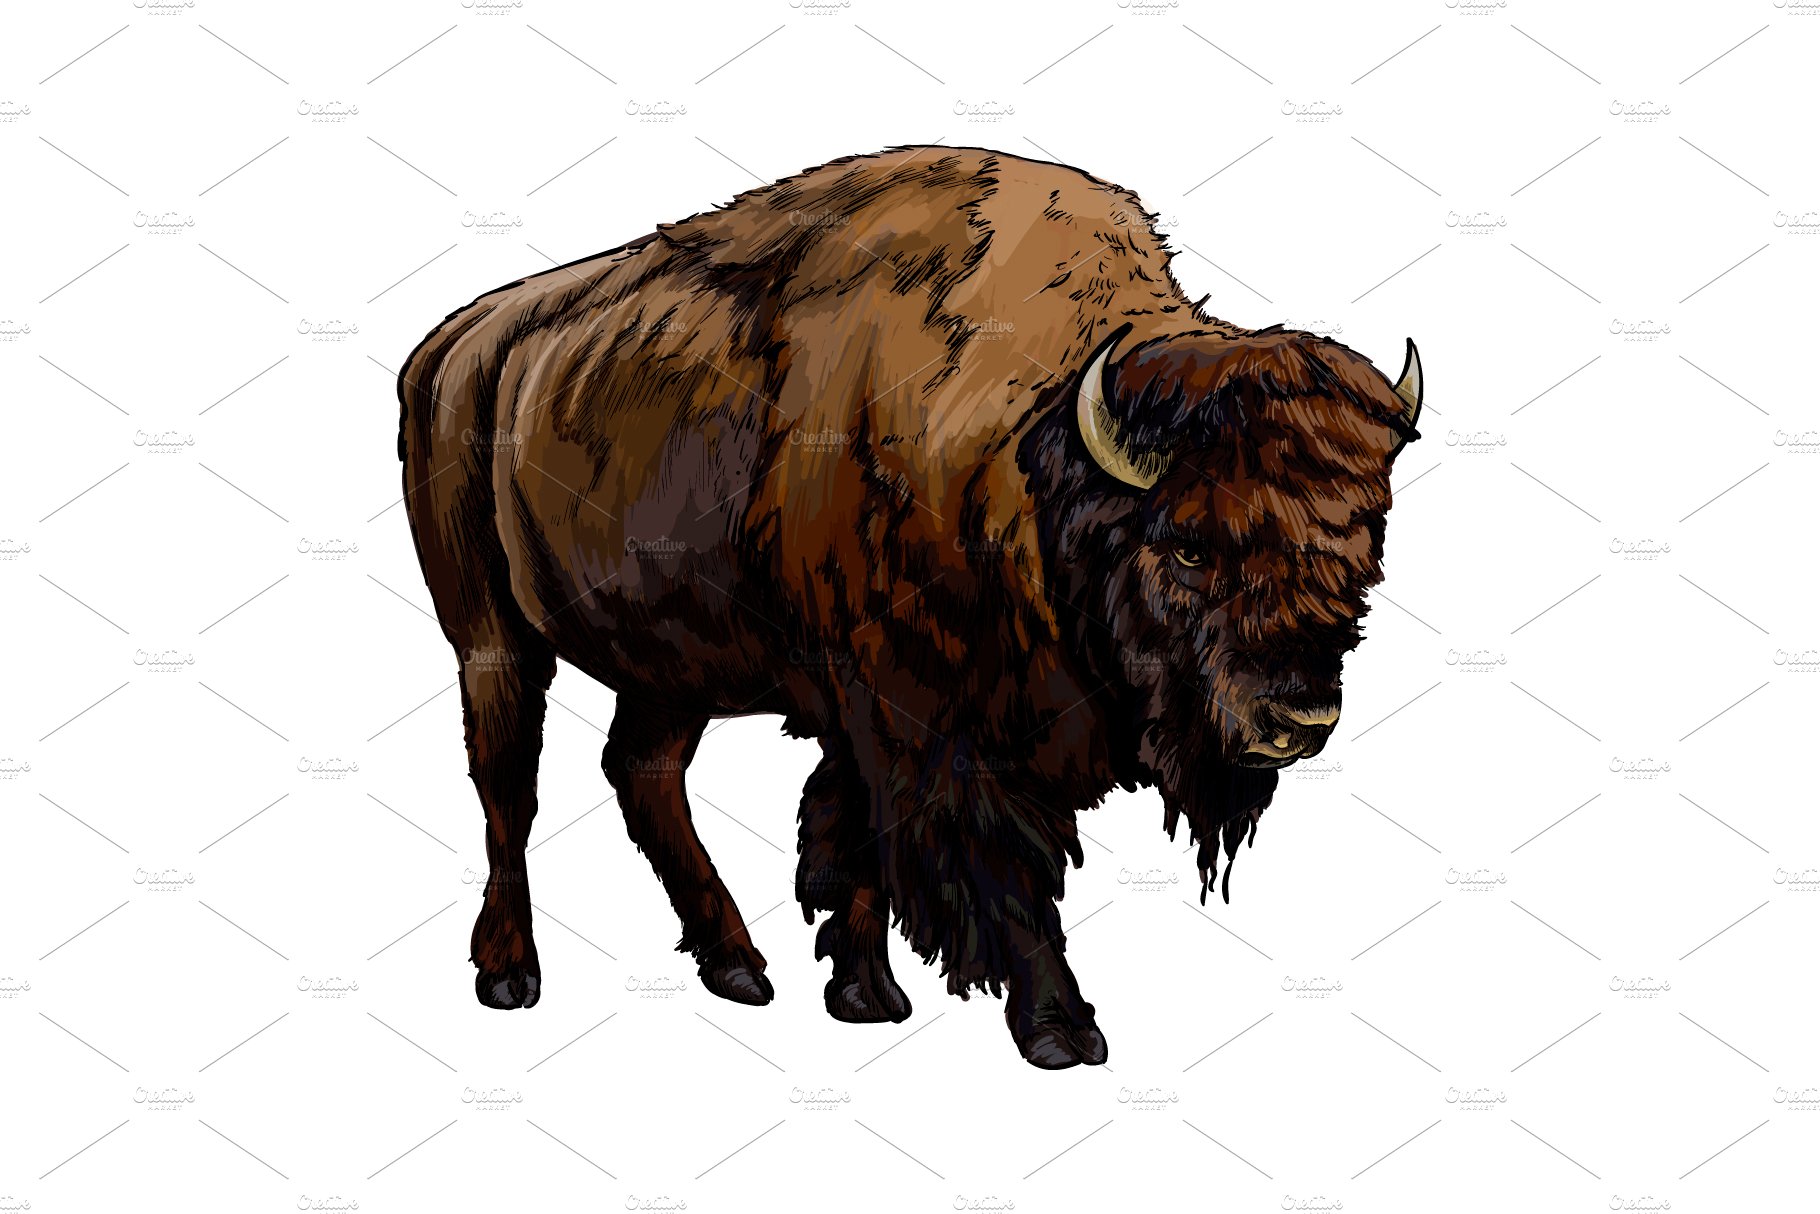 Bison, buffalo cover image.